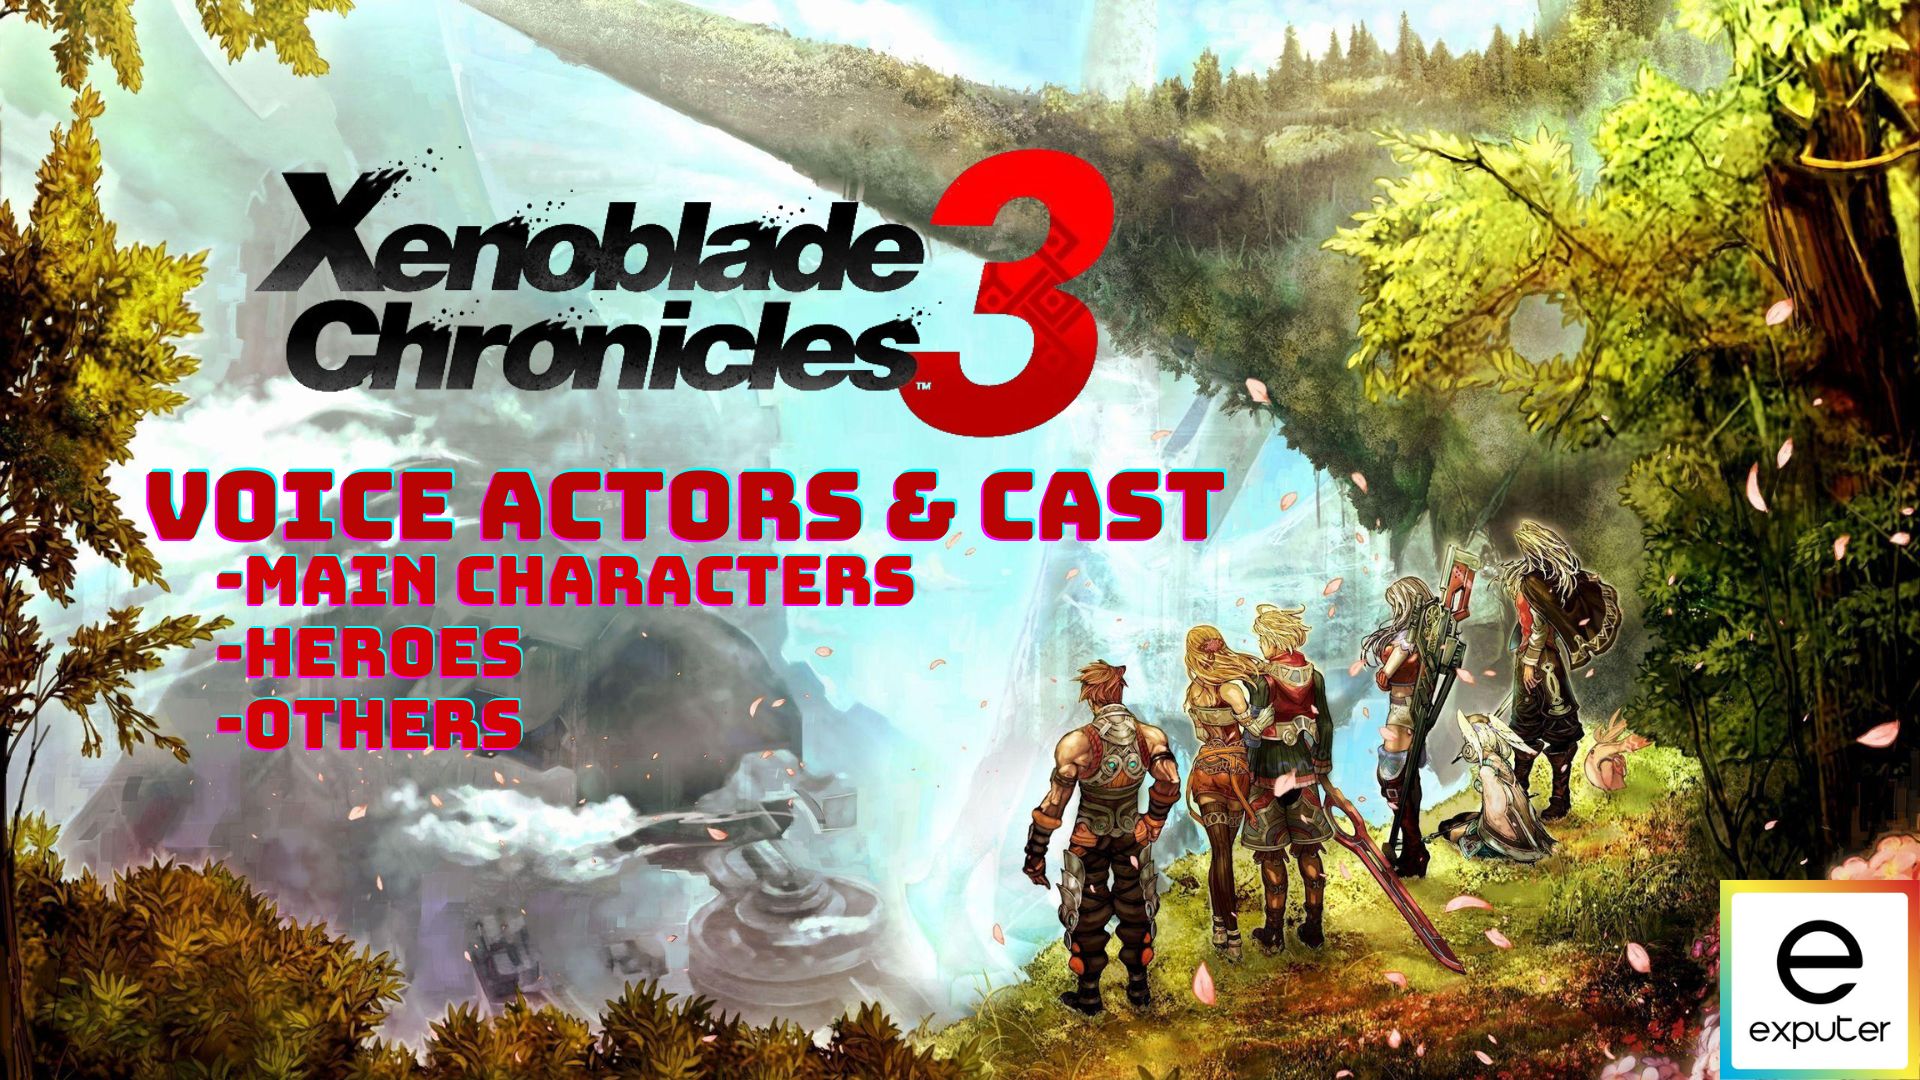 Voice Actors & Cast of Xenoblade Chronicles 3.